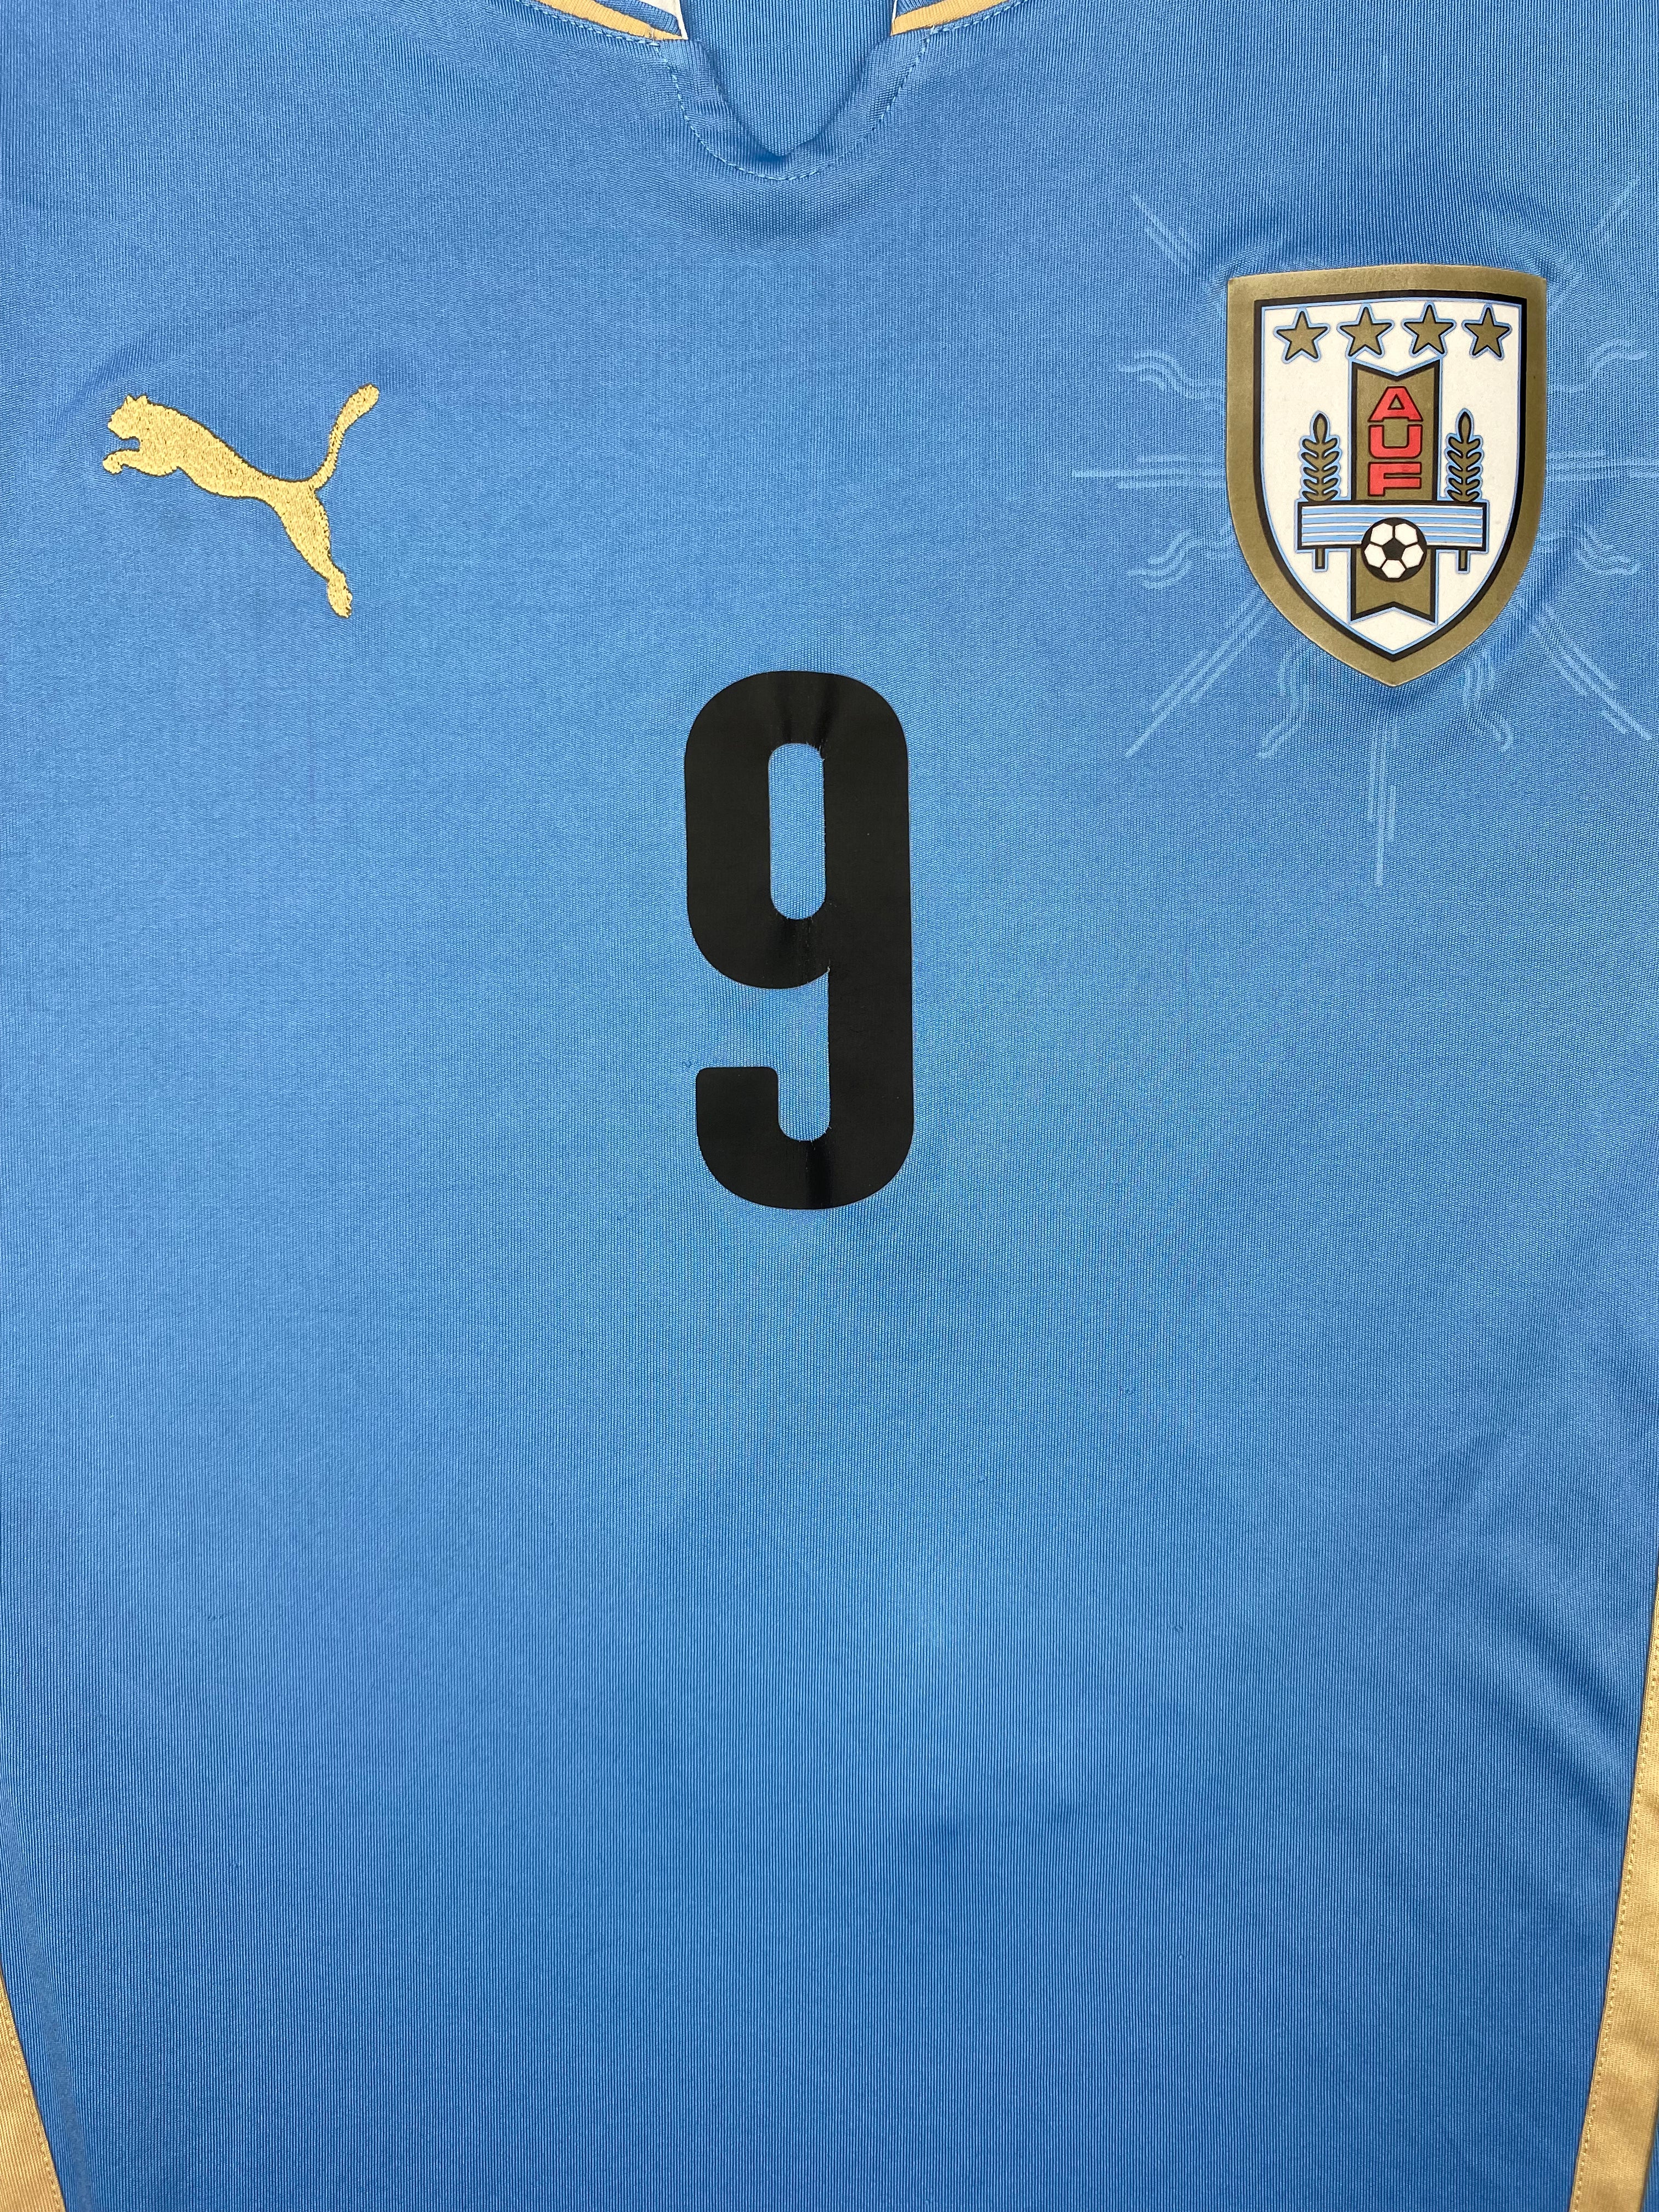 Maillot Domicile Uruguay 2014/15 Suarez #9 (L) 7.5/10